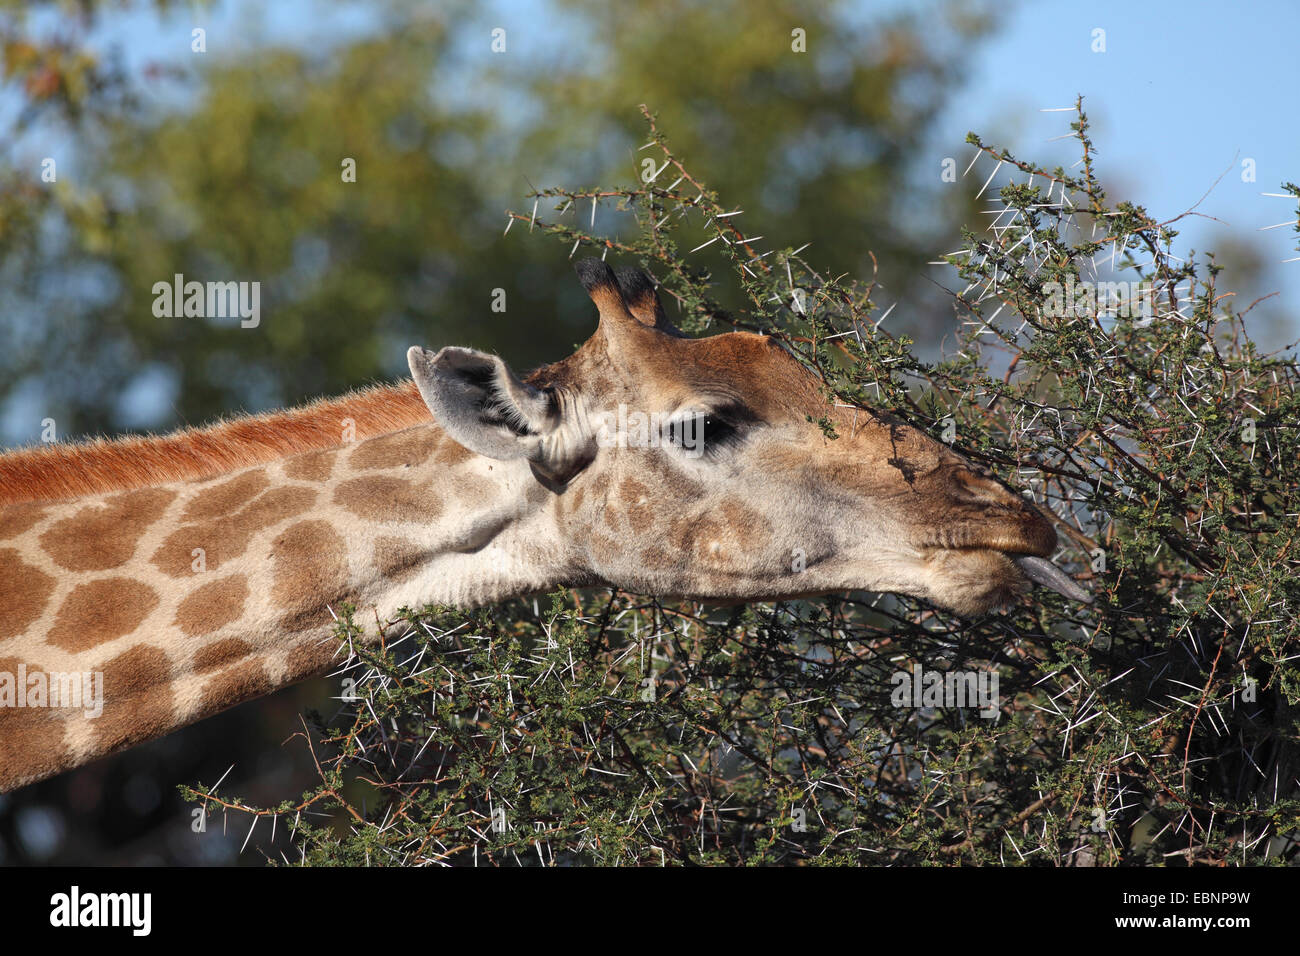 Cape giraffe (Giraffa camelopardalis giraffa), eating leaves from a thorny shrub, South Africa, Kruger National Park Stock Photo